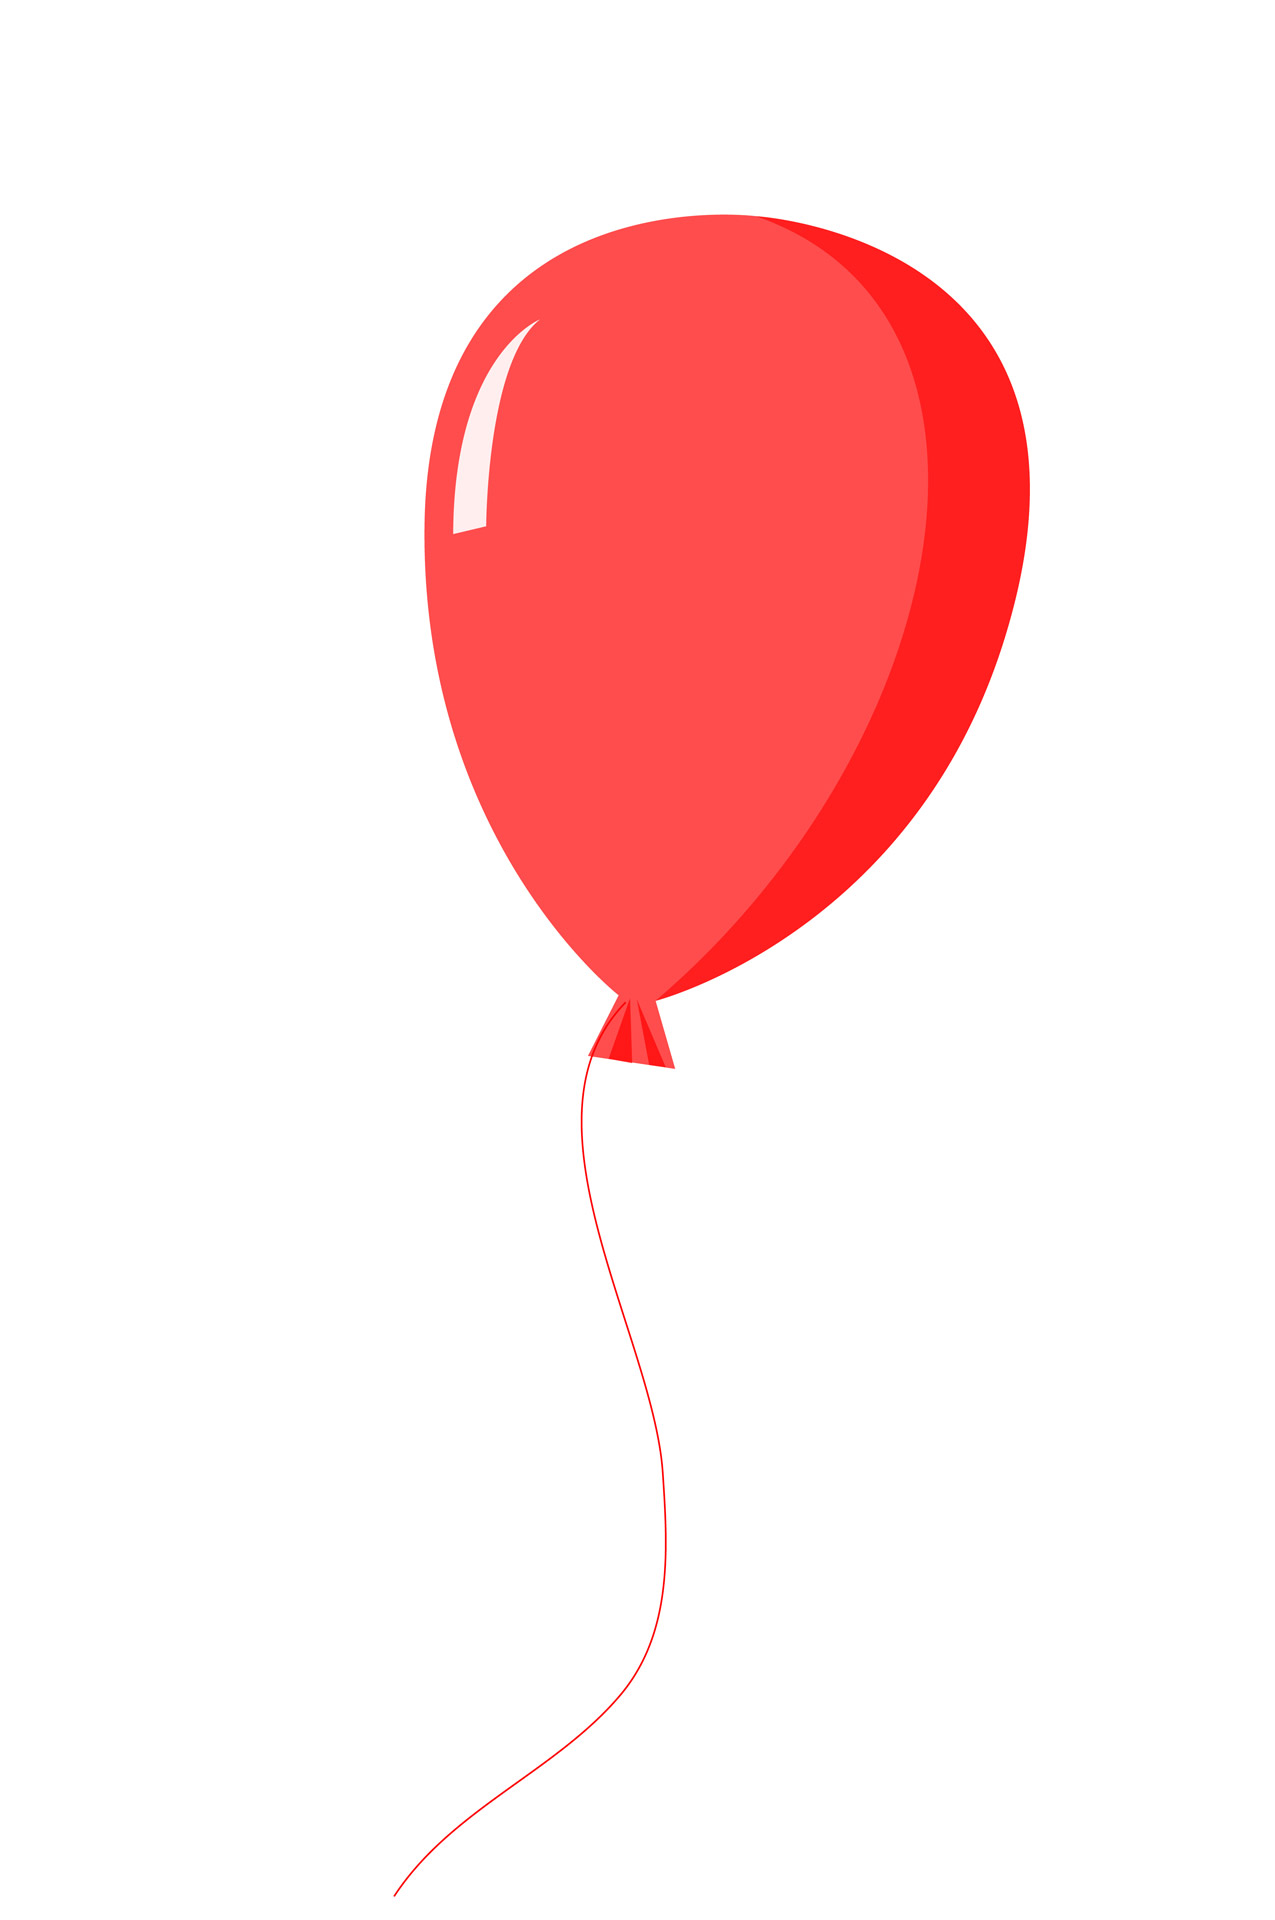 Clip art balloons clipart on clip